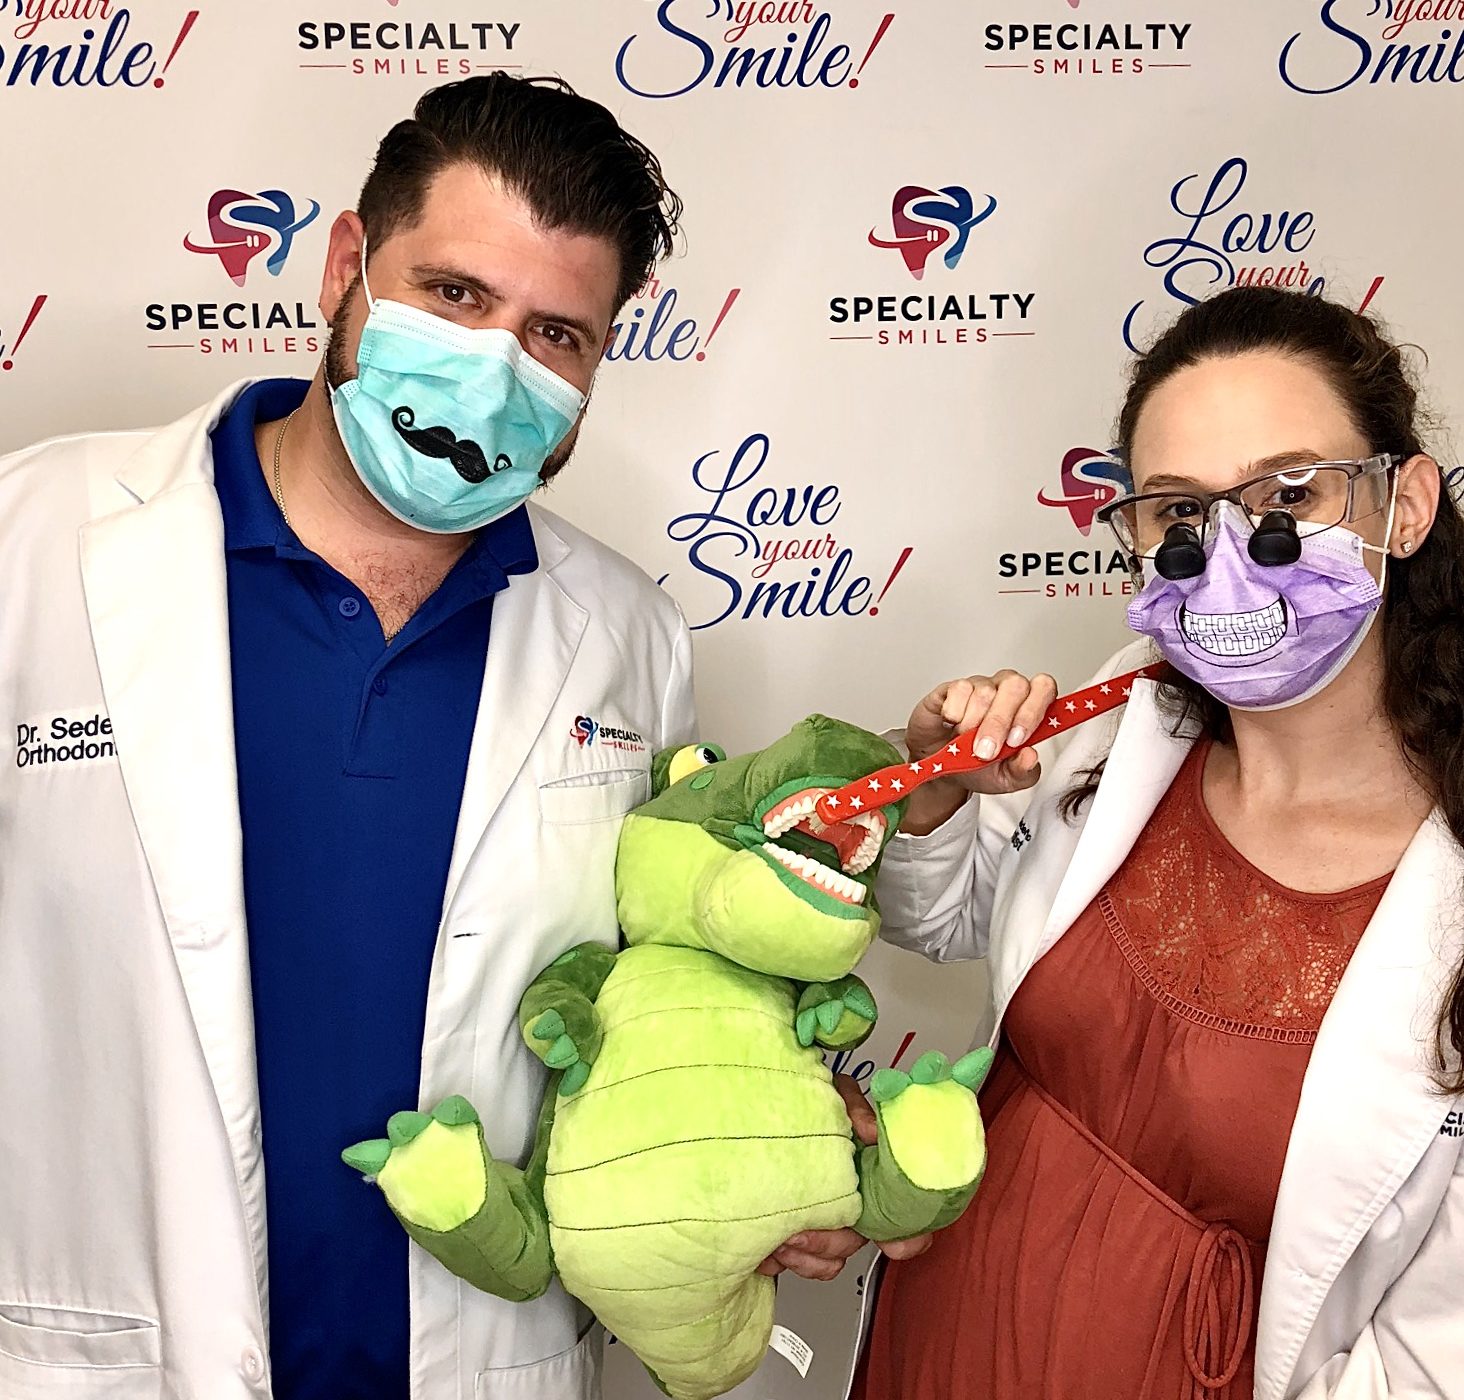 Specialty Smiles Team Orthodontic Treatment & Improved Dental Health | Specialty Smiles Lynda Lantz Contributor Miami Moms Blog